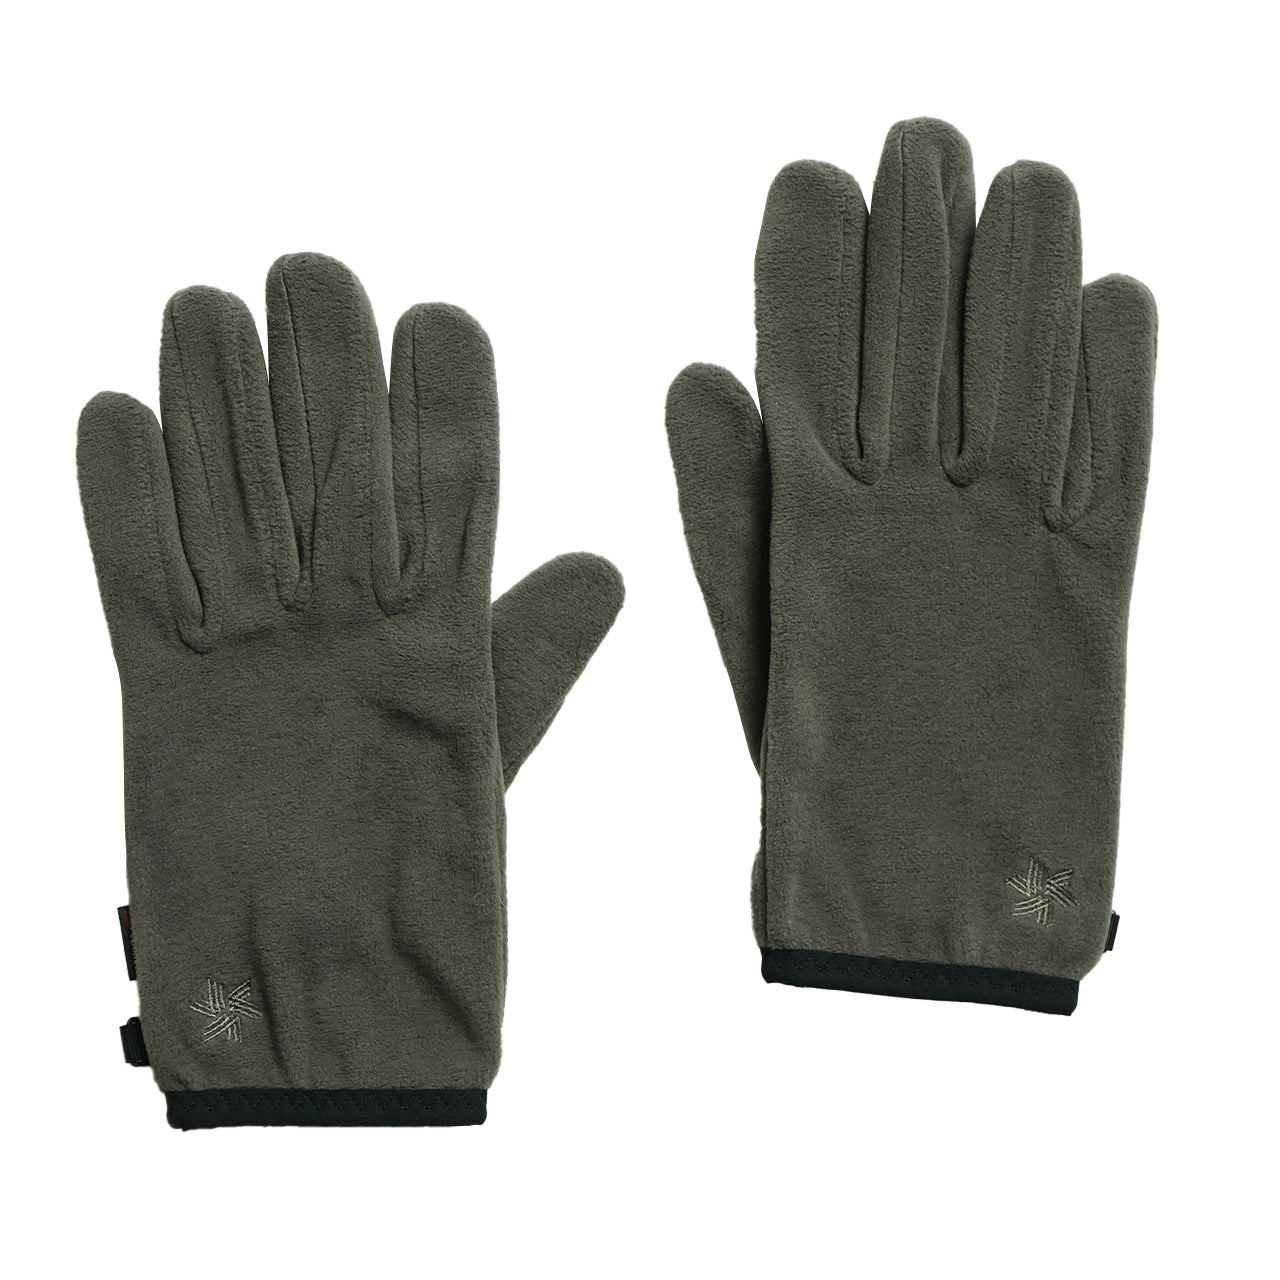 Goldwin ゴールドウィン ポーラテック マイクロ フリース グローブ POLARTEC Micro Fleece Gloves 手袋  GL93388【メール便可】